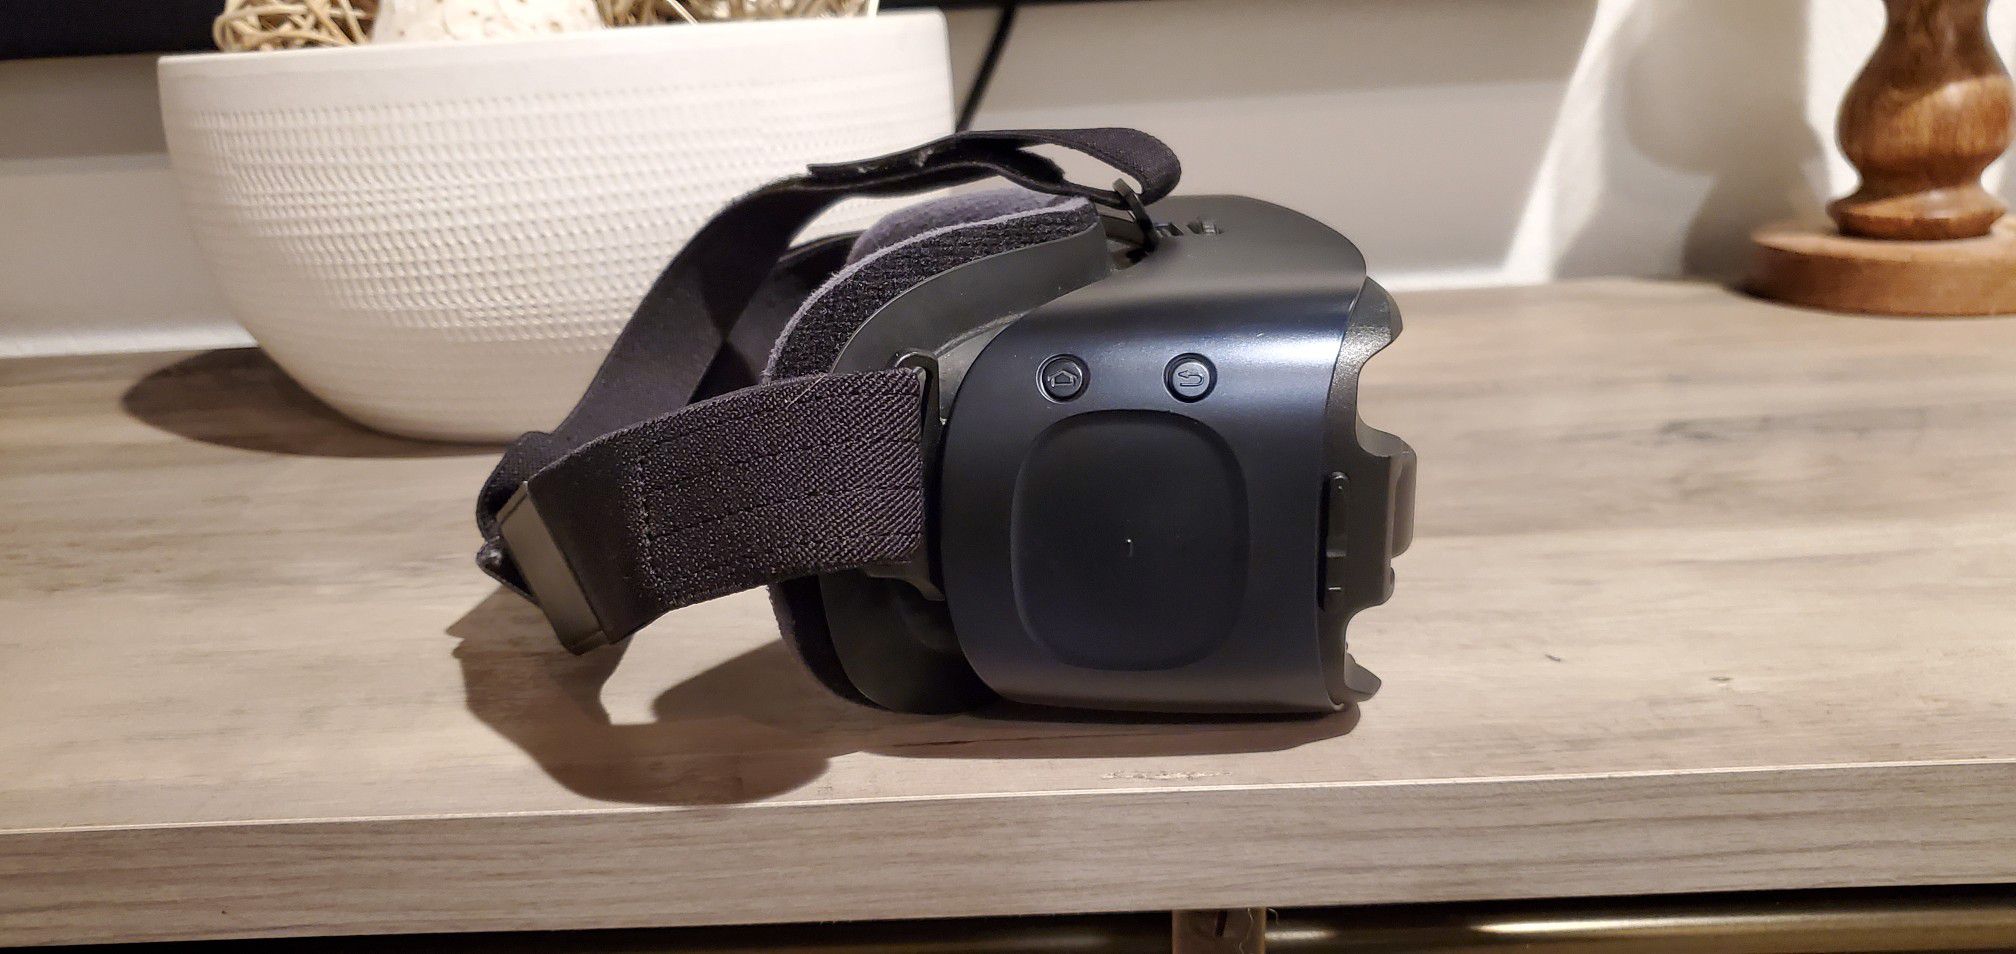 Samsung gear VR headset by Oculus